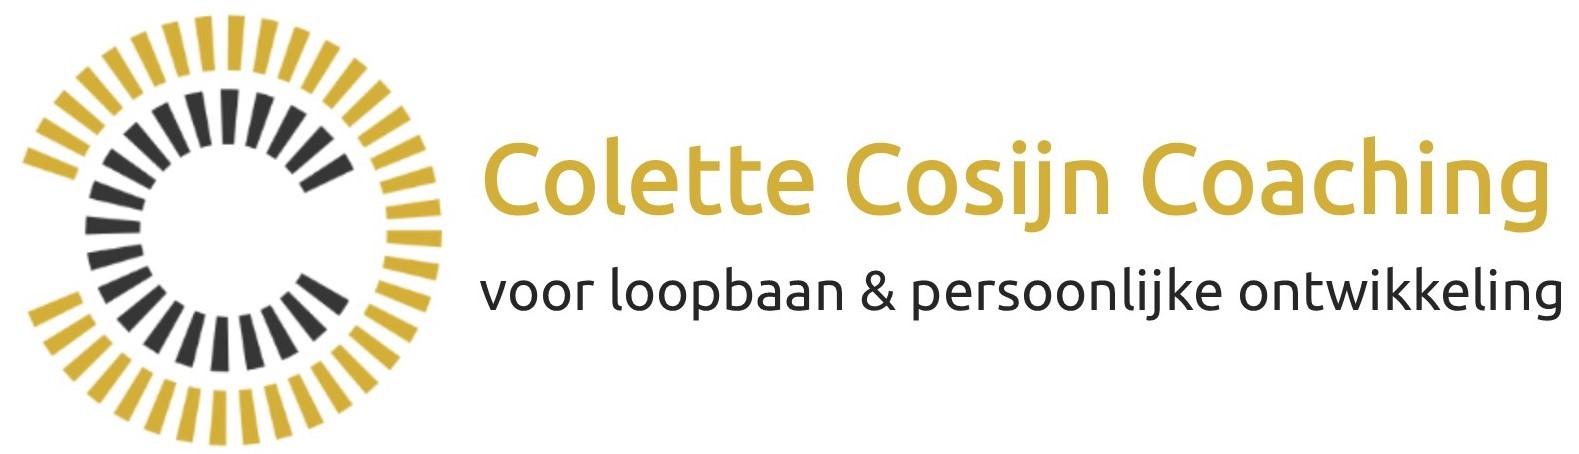 Colette Cosijn Coaching